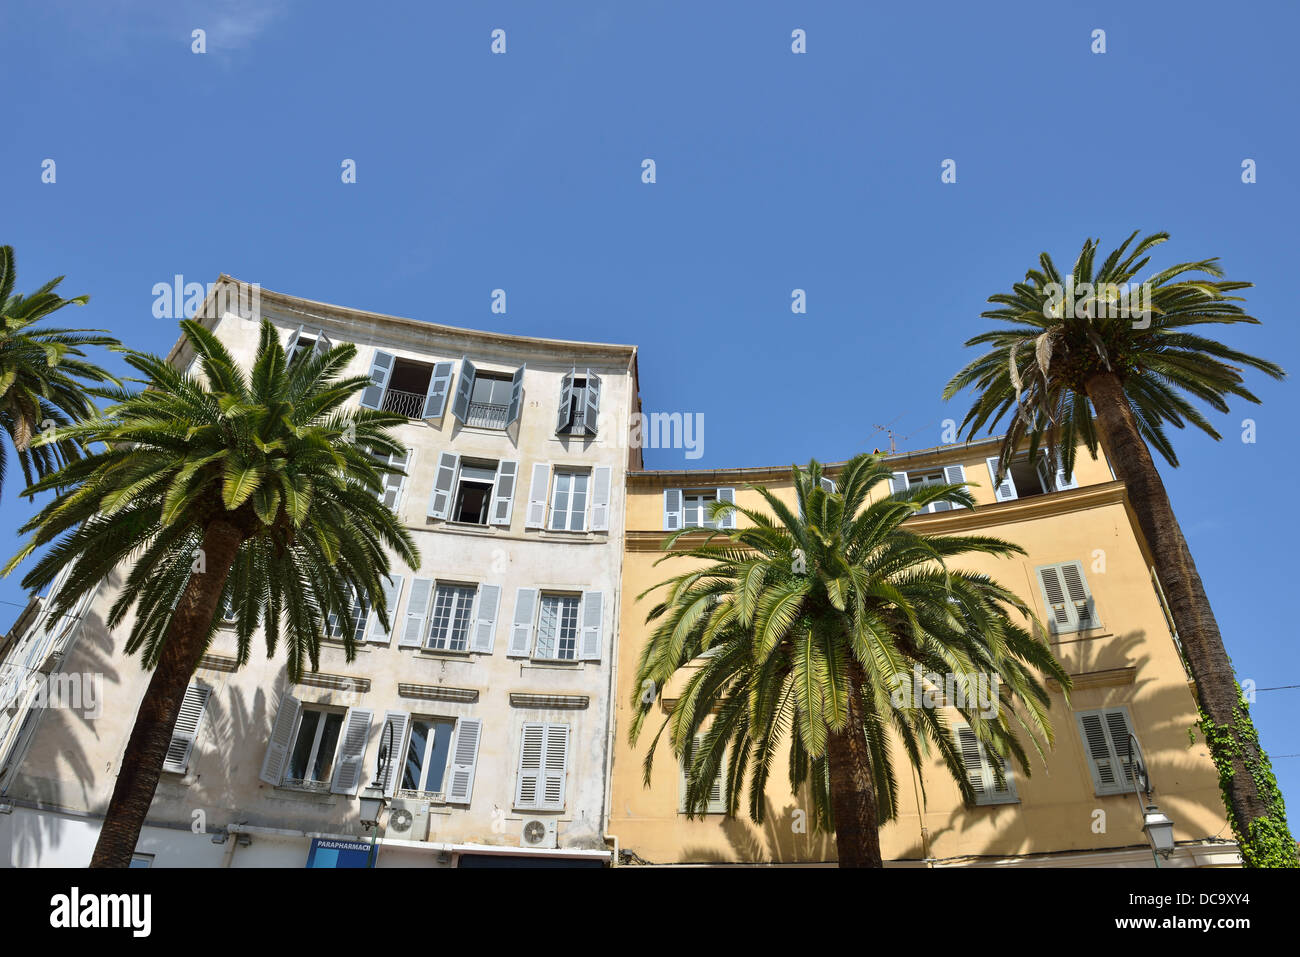 Altbau Fassaden, Ajaccio, Korsika, Frankreich Stockfoto